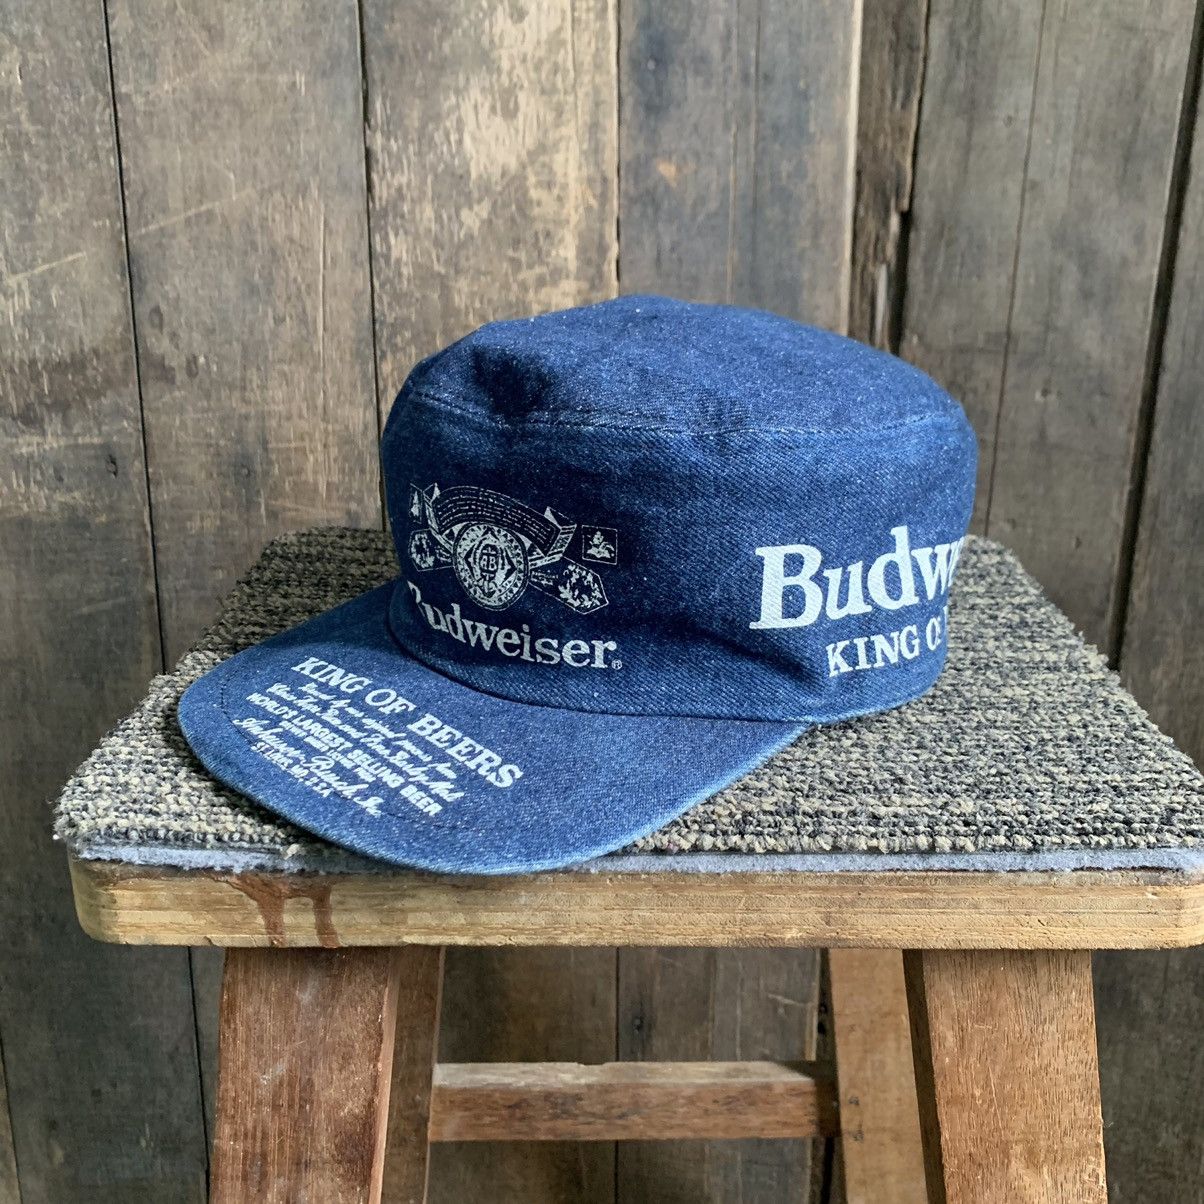 Vintage budweiser fishing team hat - Gem